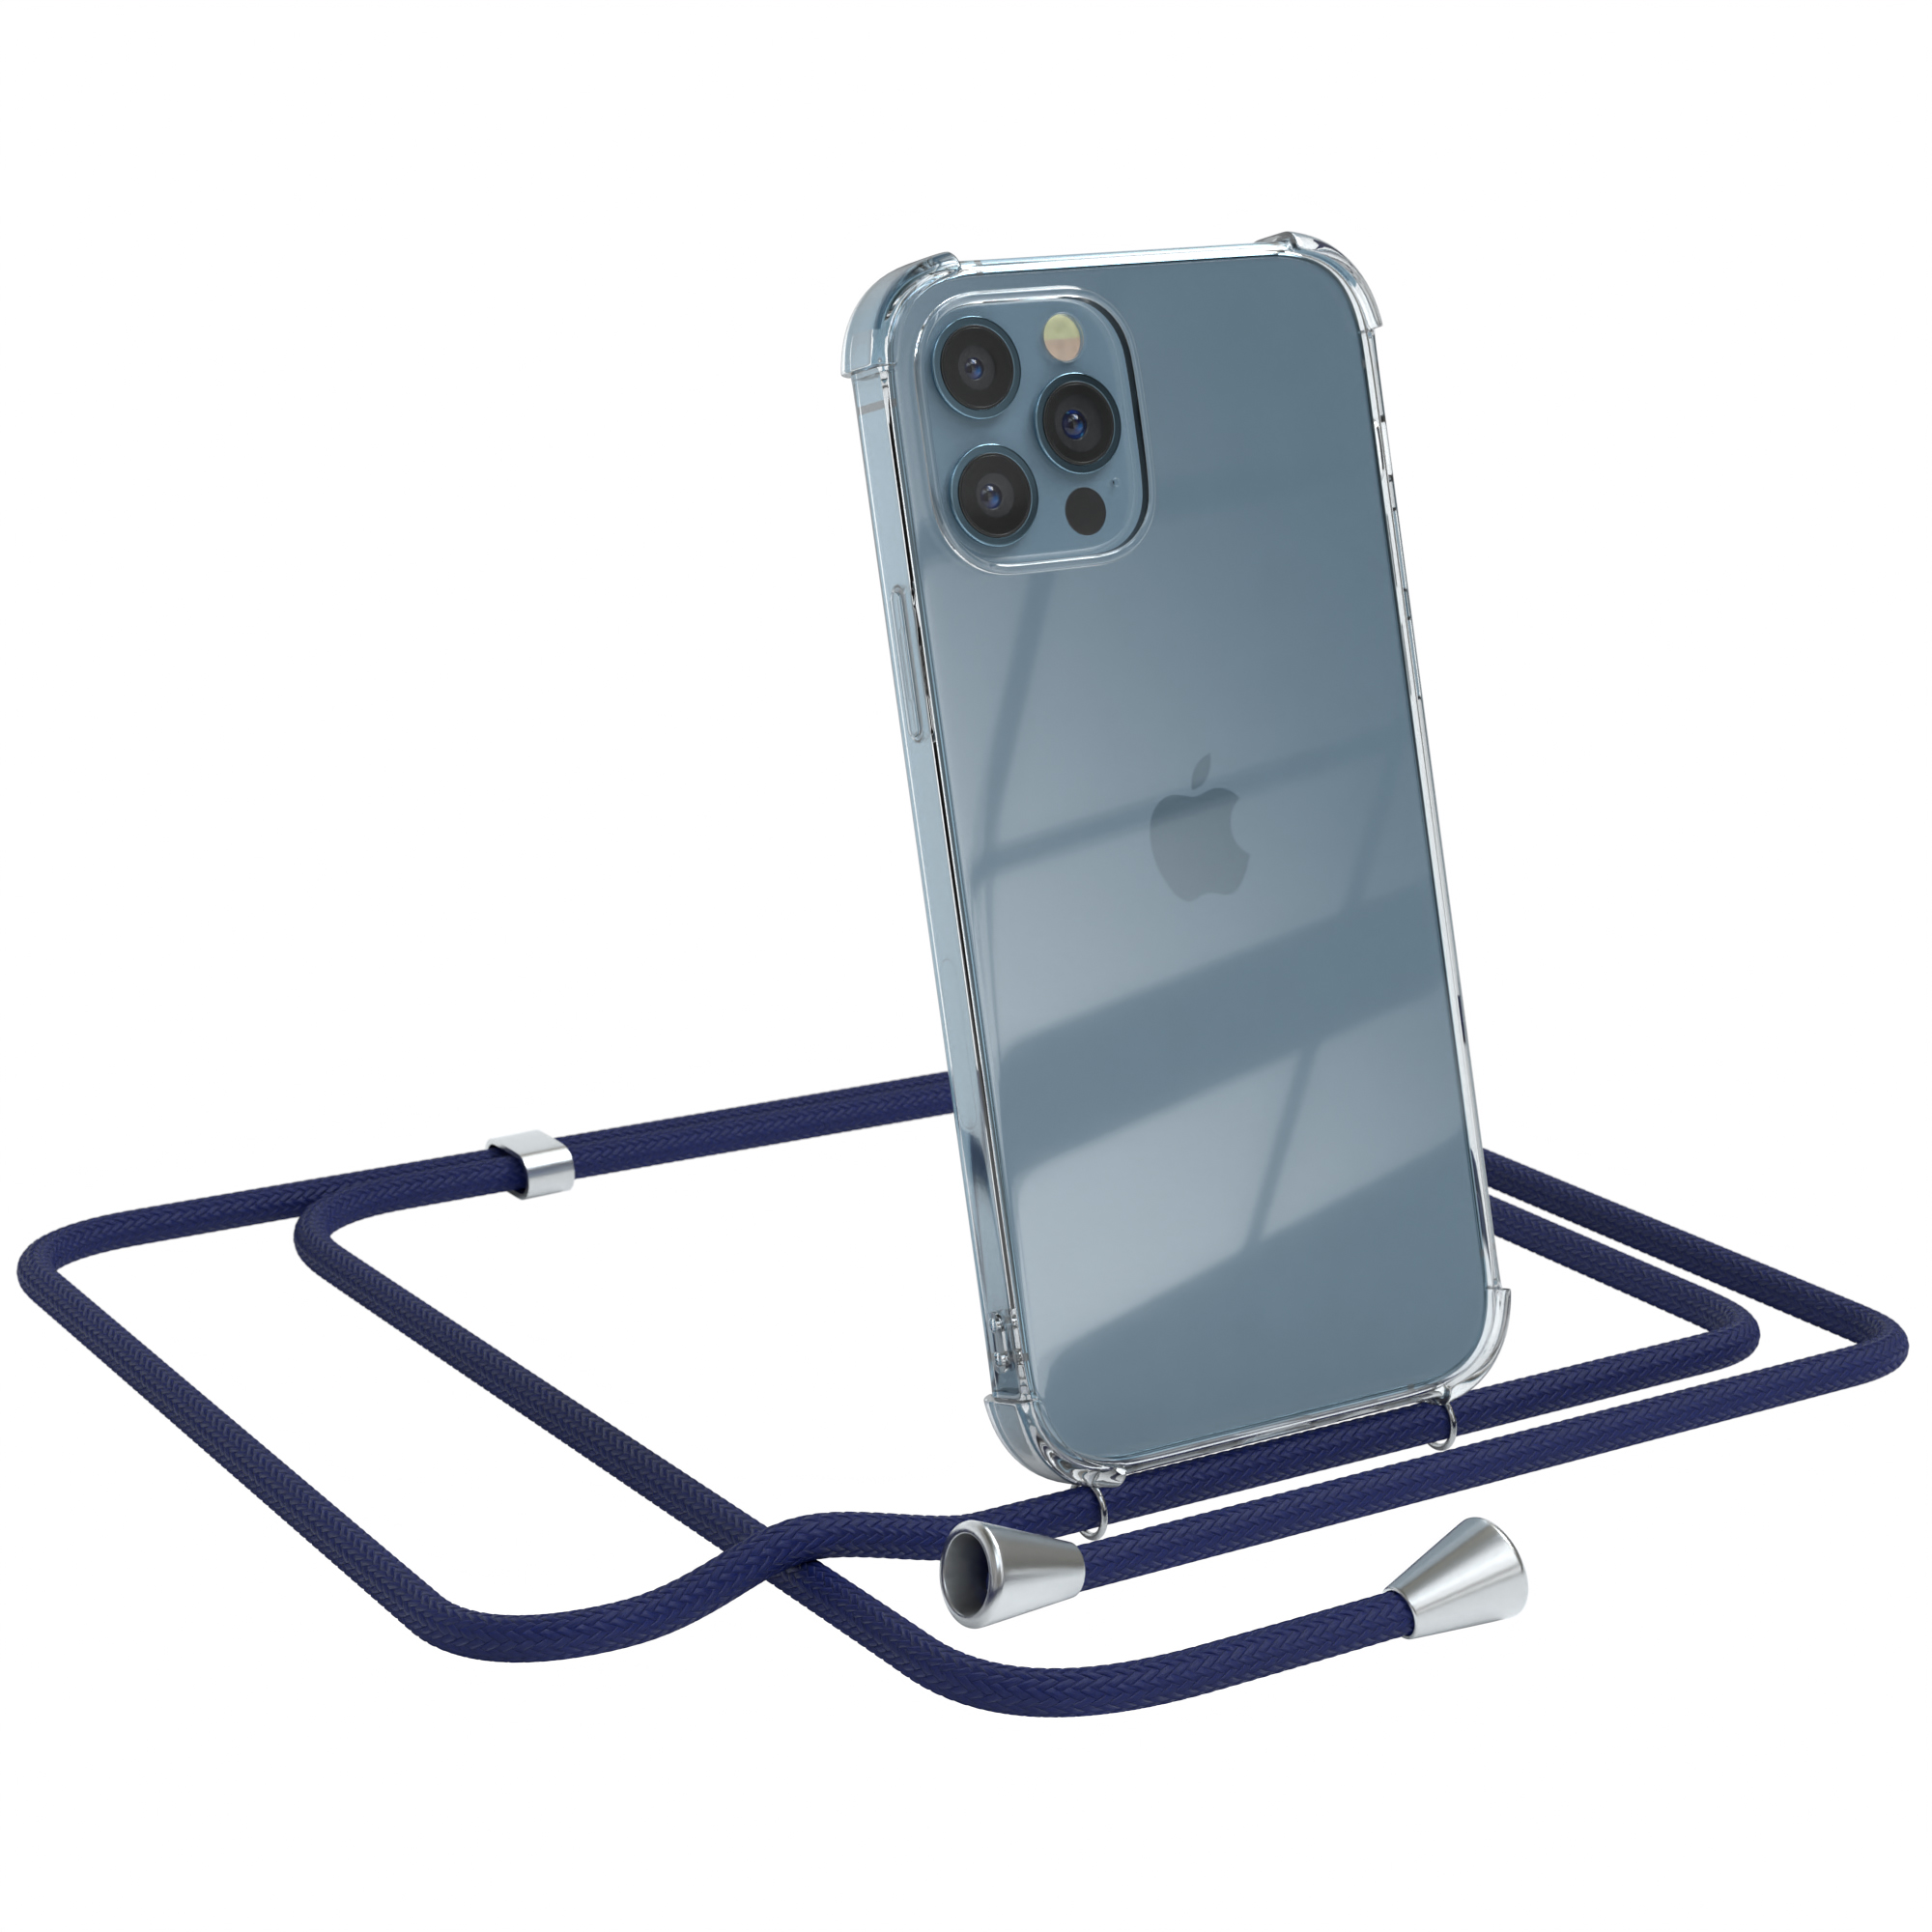 EAZY CASE Chain normal, / Silber iPhone Umhängetasche, Pro, 12 Apple, Blau Clips / 12